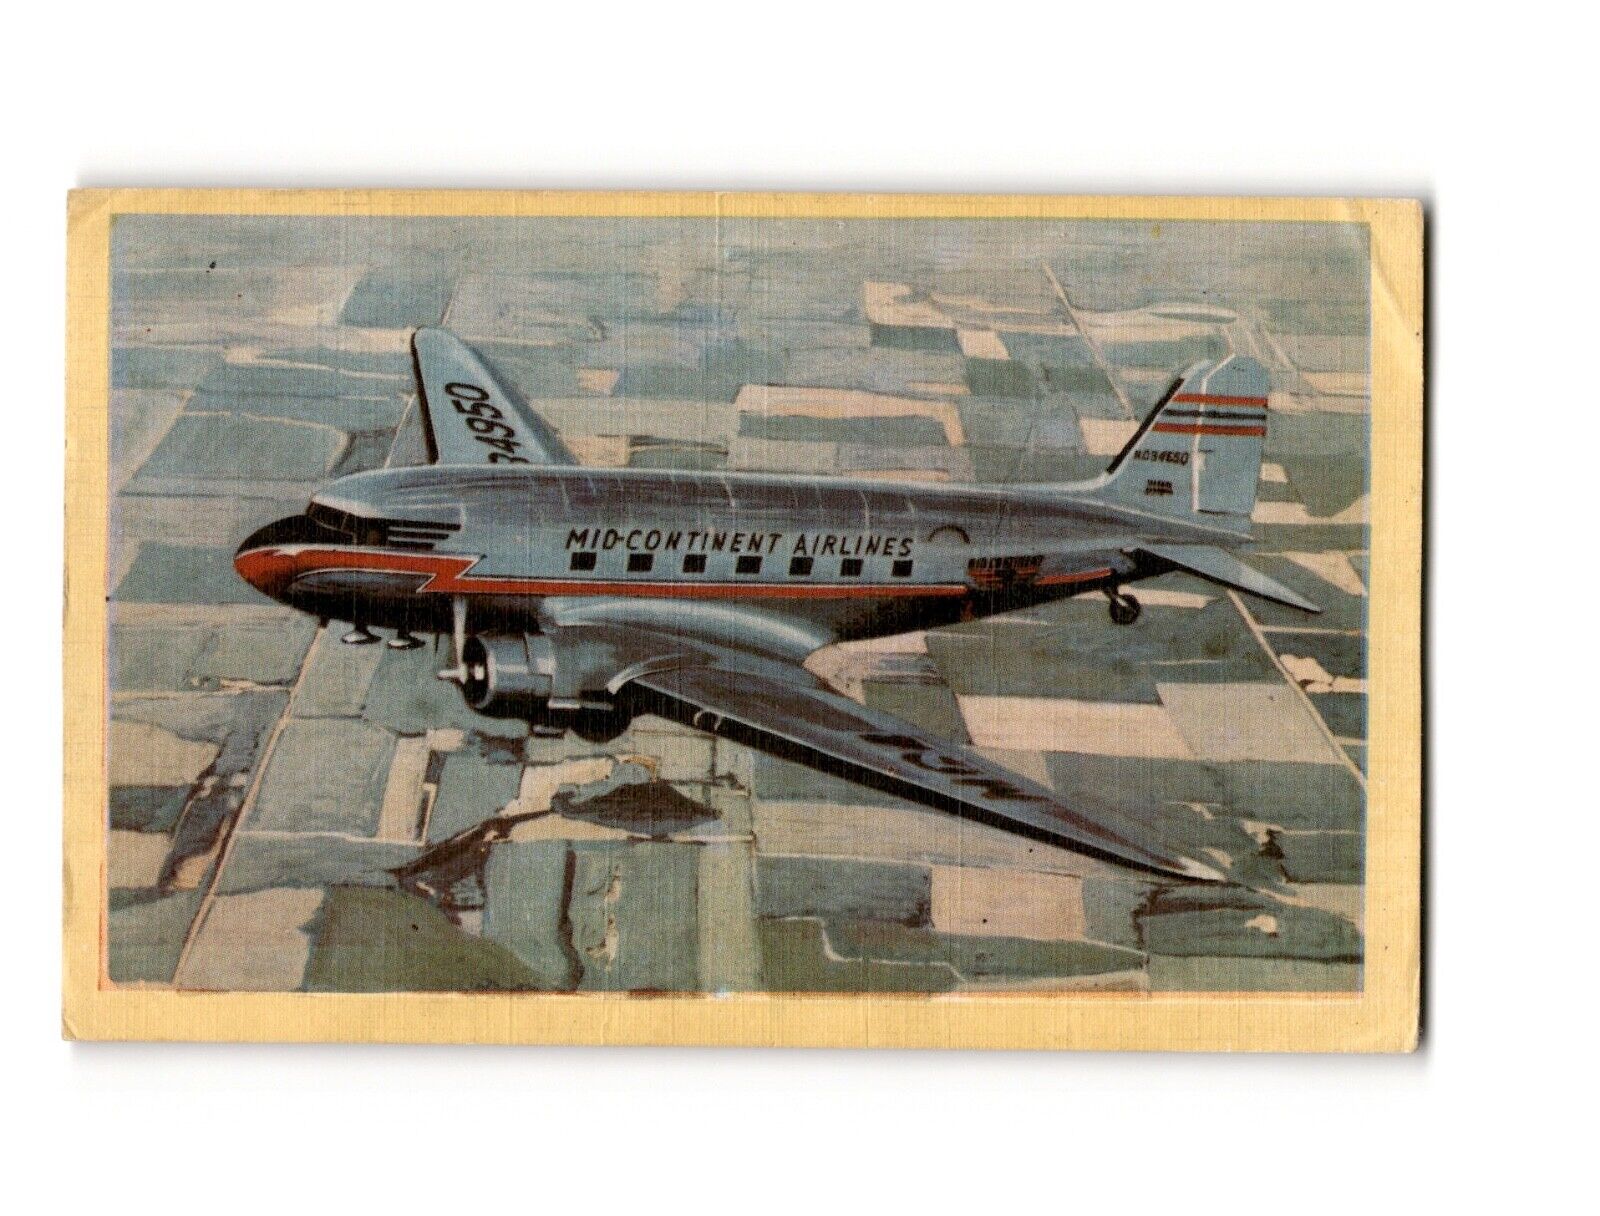 1945 Mid-Continent Airlines Vintage Postcard - Retro Aerial Plane Photograph